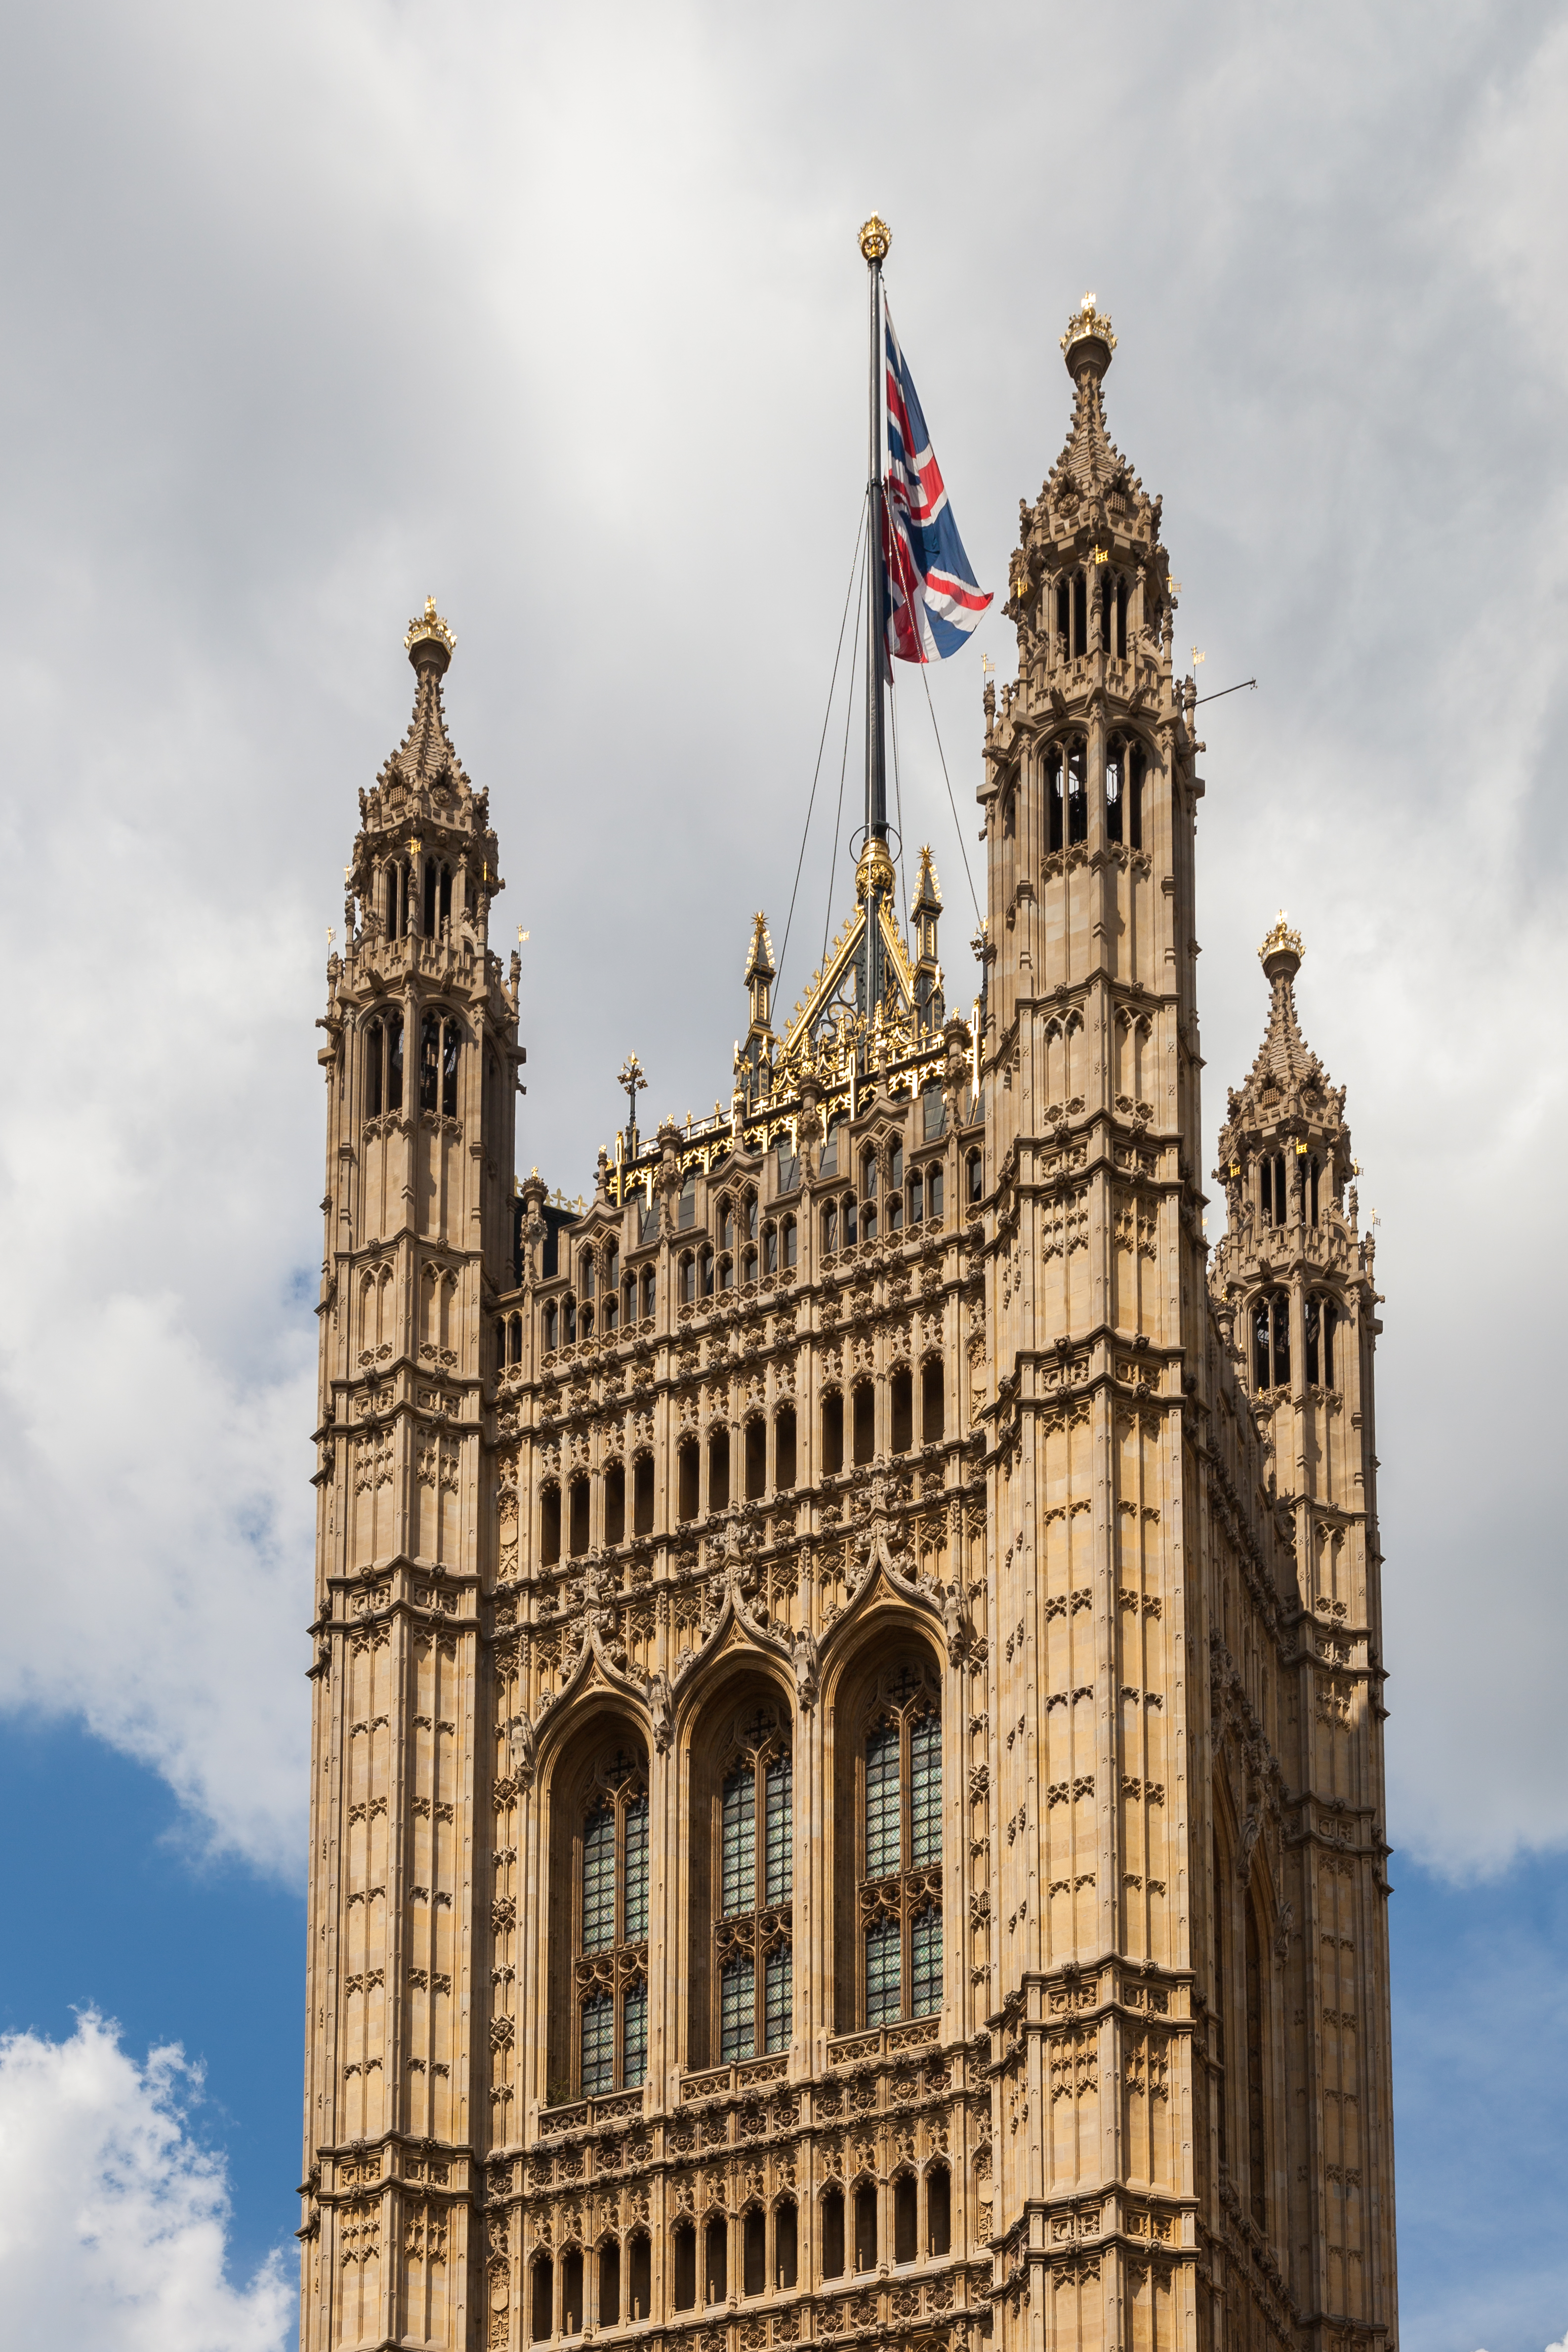 Torre Victoria, Palacio de Westminster, Londres, Inglaterra, 2014-08-07, DD 021